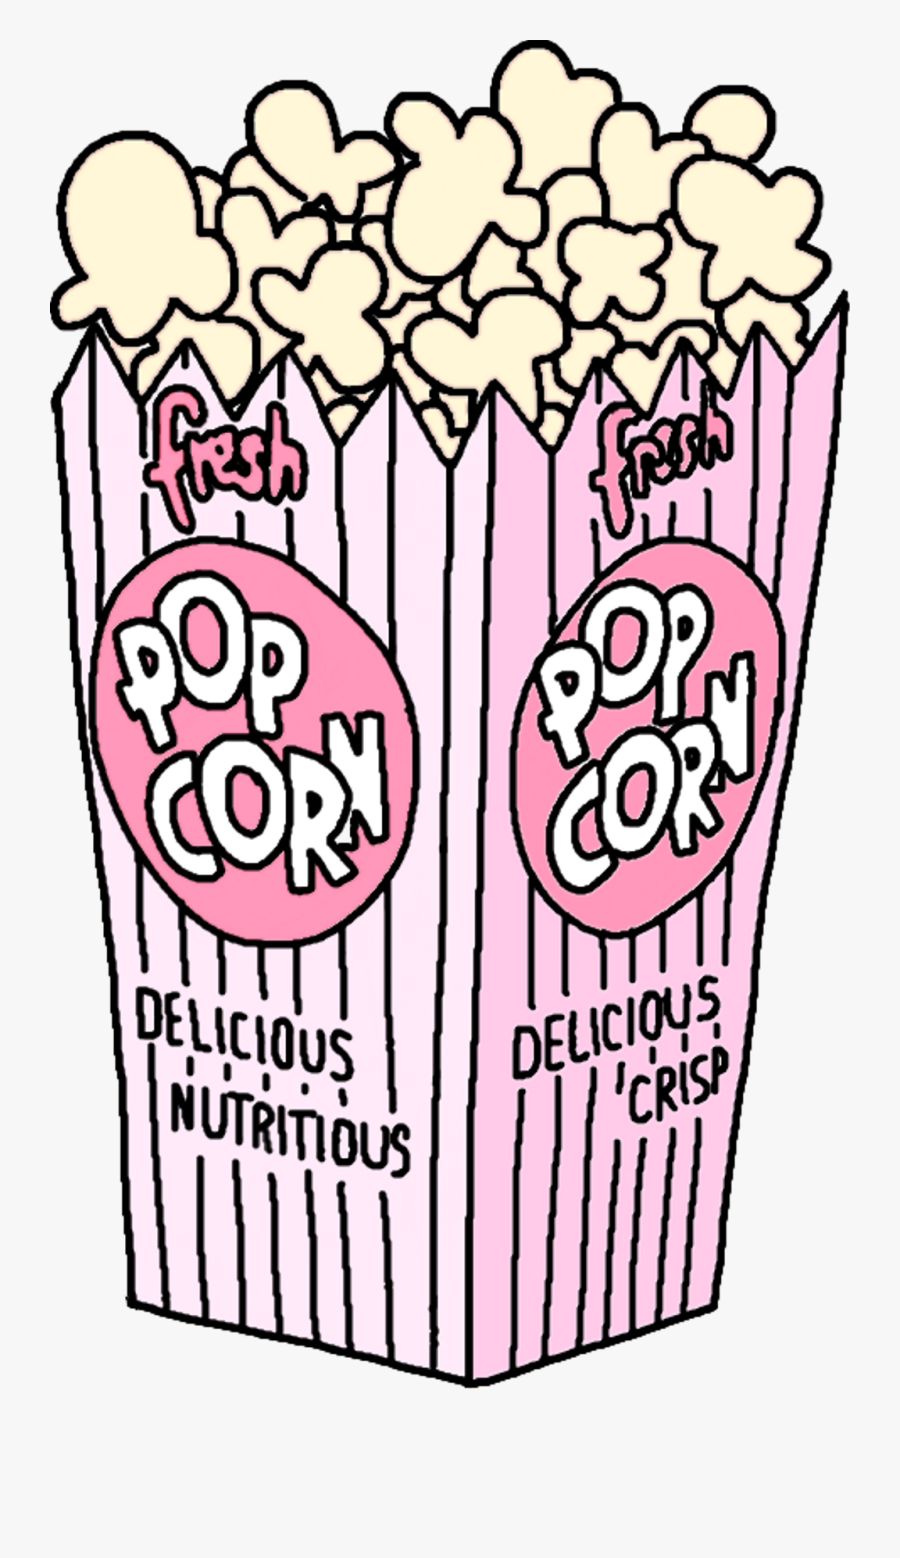 Popcorn Bowl Png Clipart - Popcorn Png, Transparent Clipart